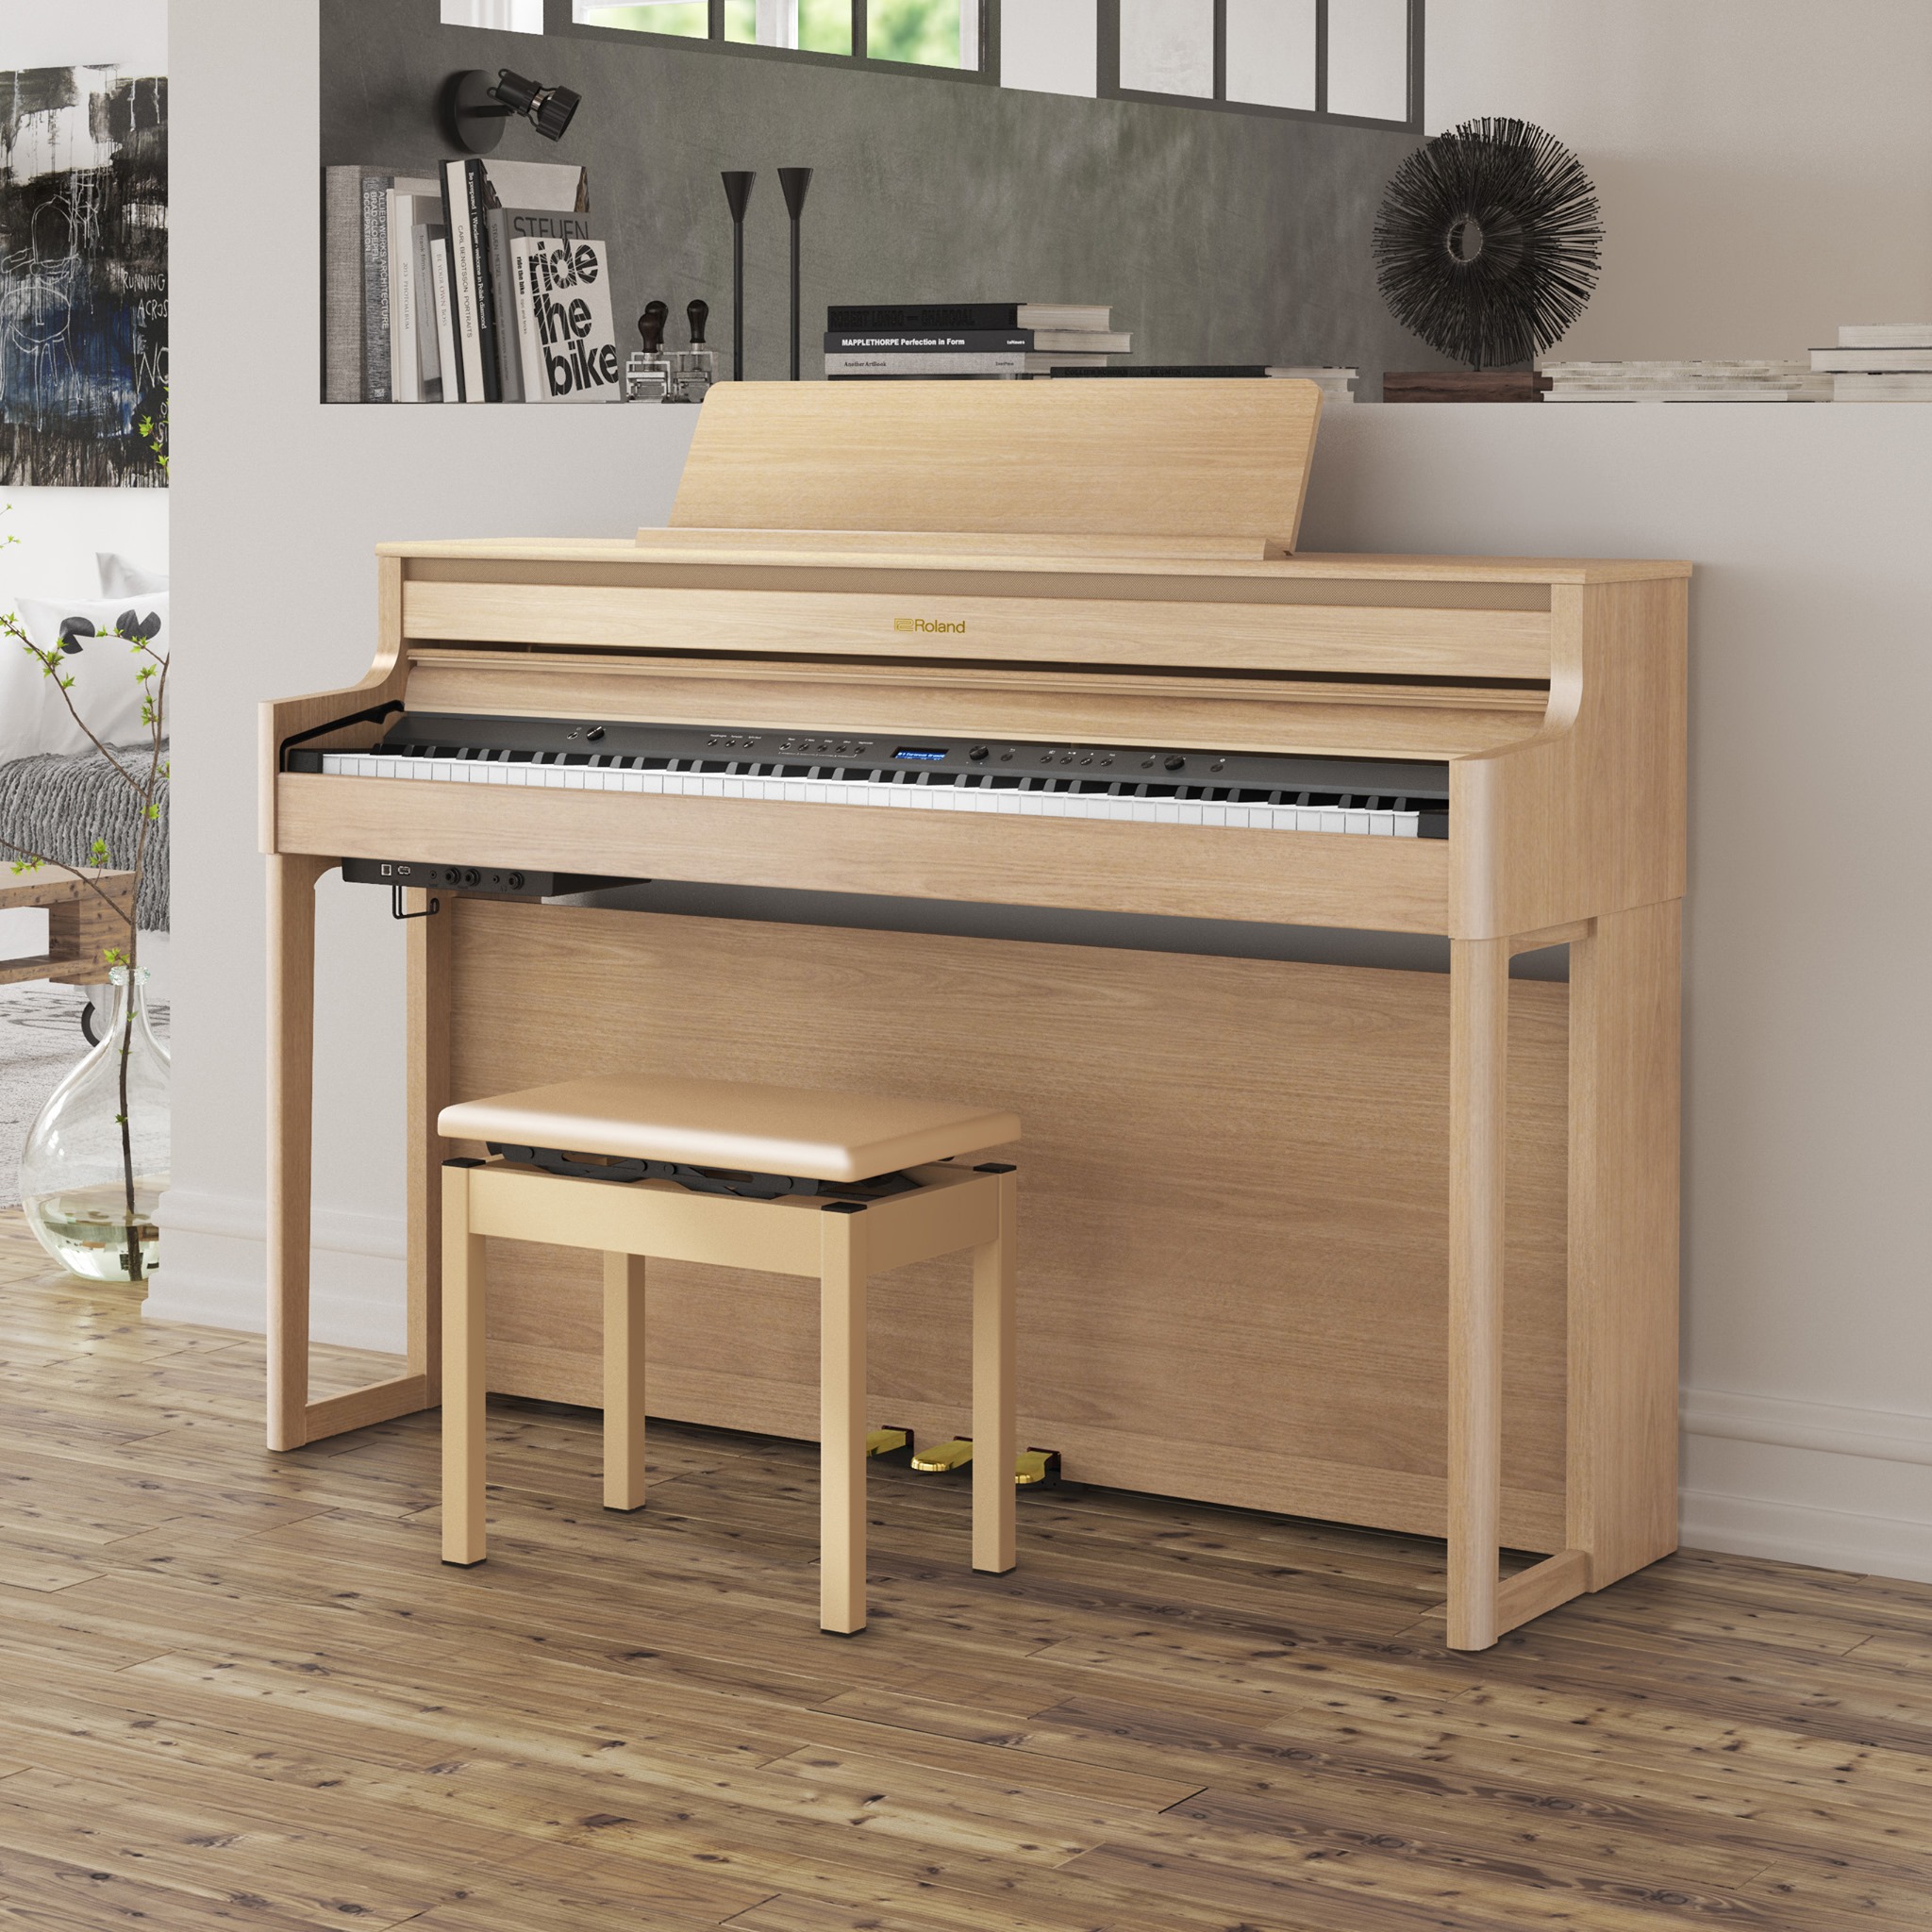 🎹Roland HP704家用數碼鋼琴🎹 優美的外觀和真實鋼琴觸鍵，配備四個喇叭的音響系統!